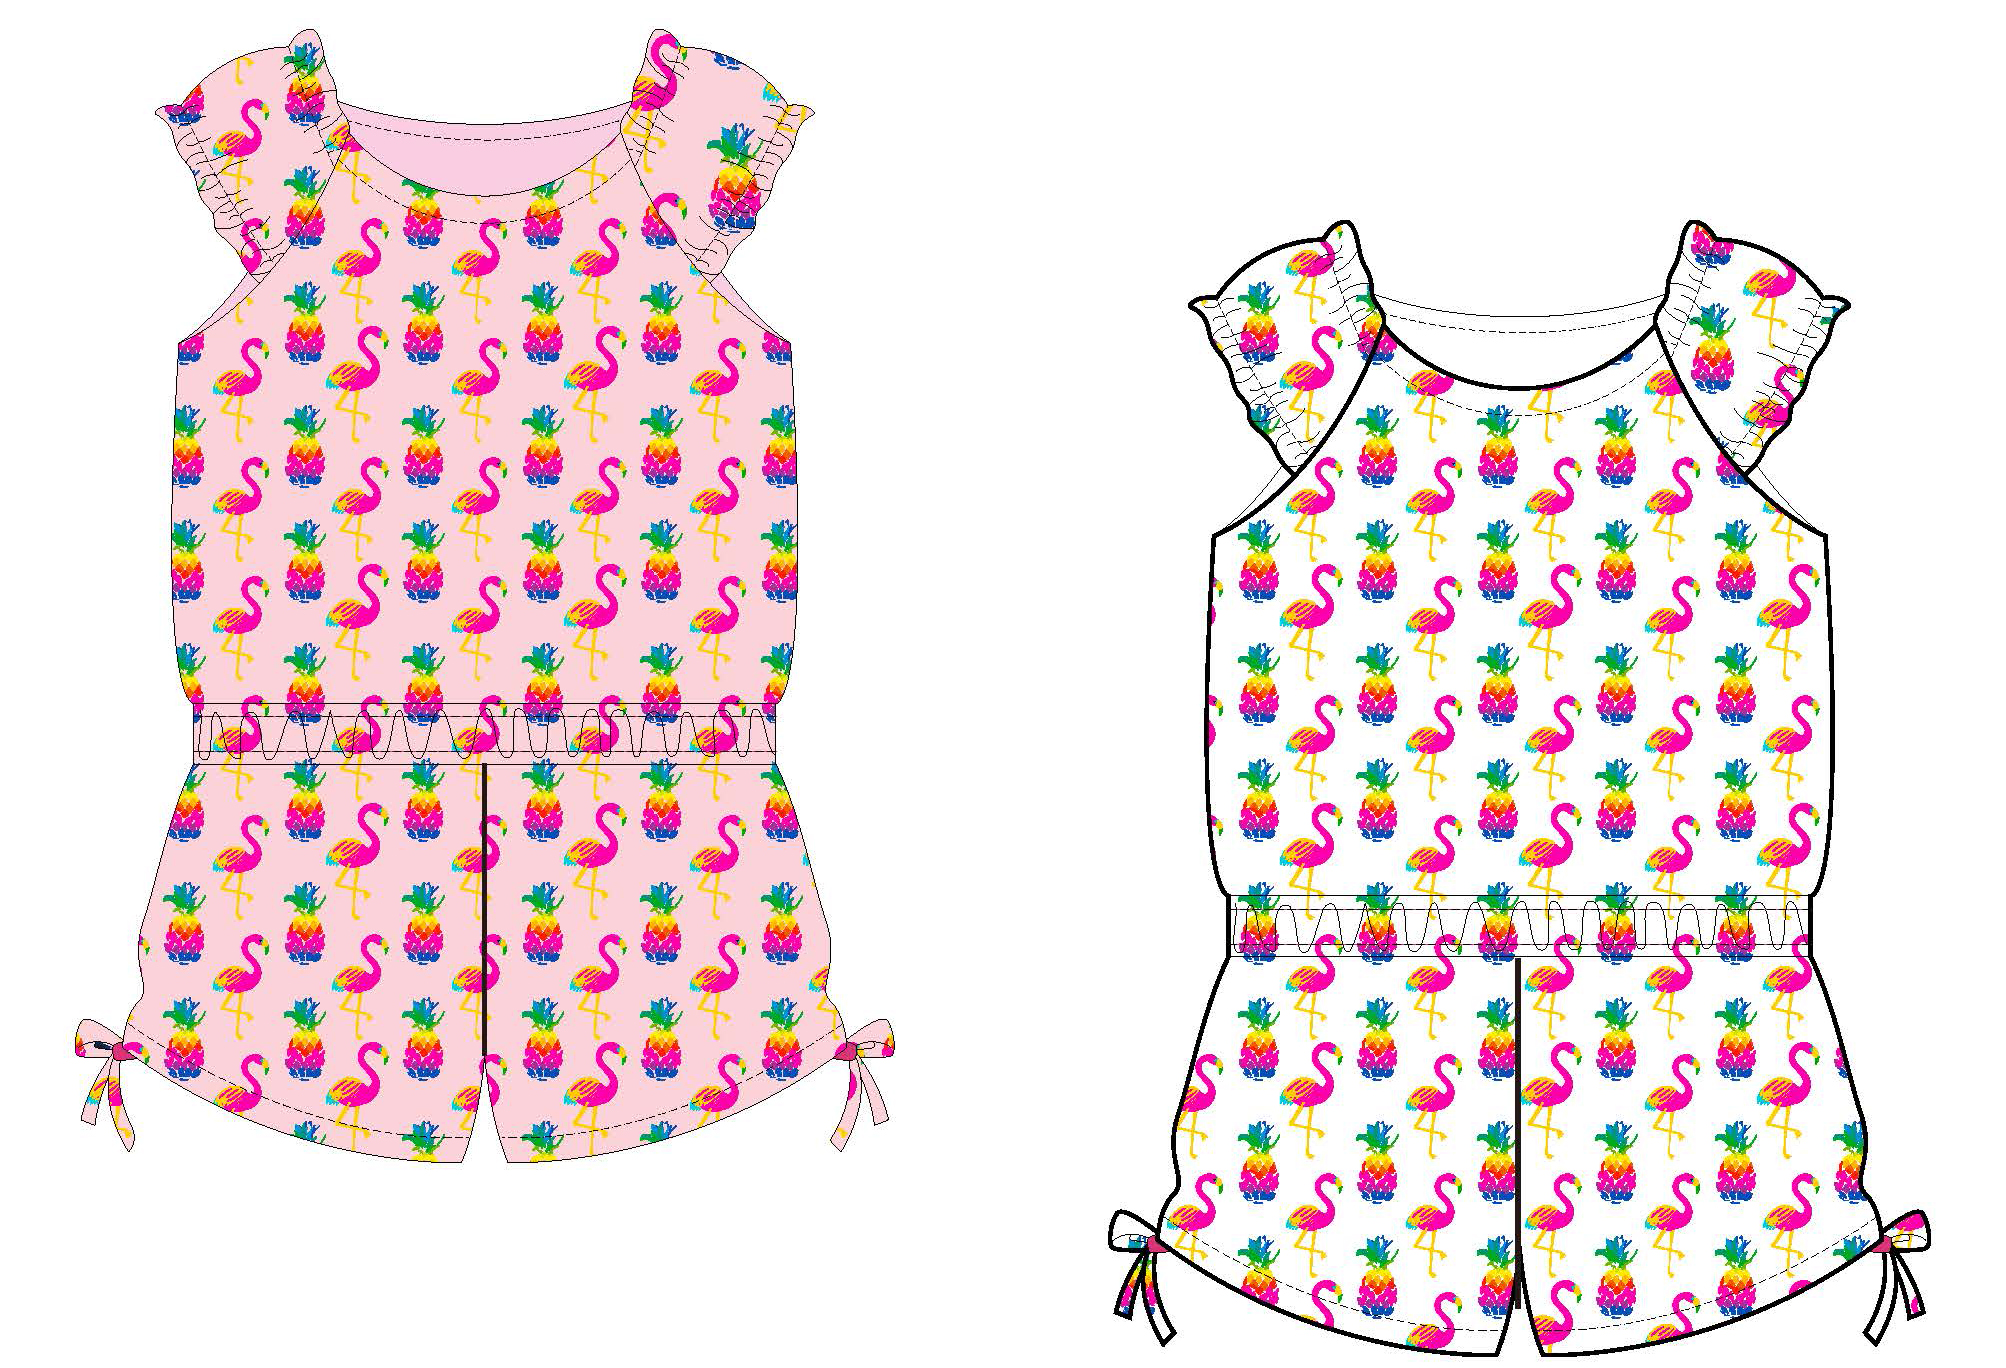 Baby Girl's Printed Knit Romper DRESS w/ Rainbow Flamingo & Pineapple Print - Size 12M-24M